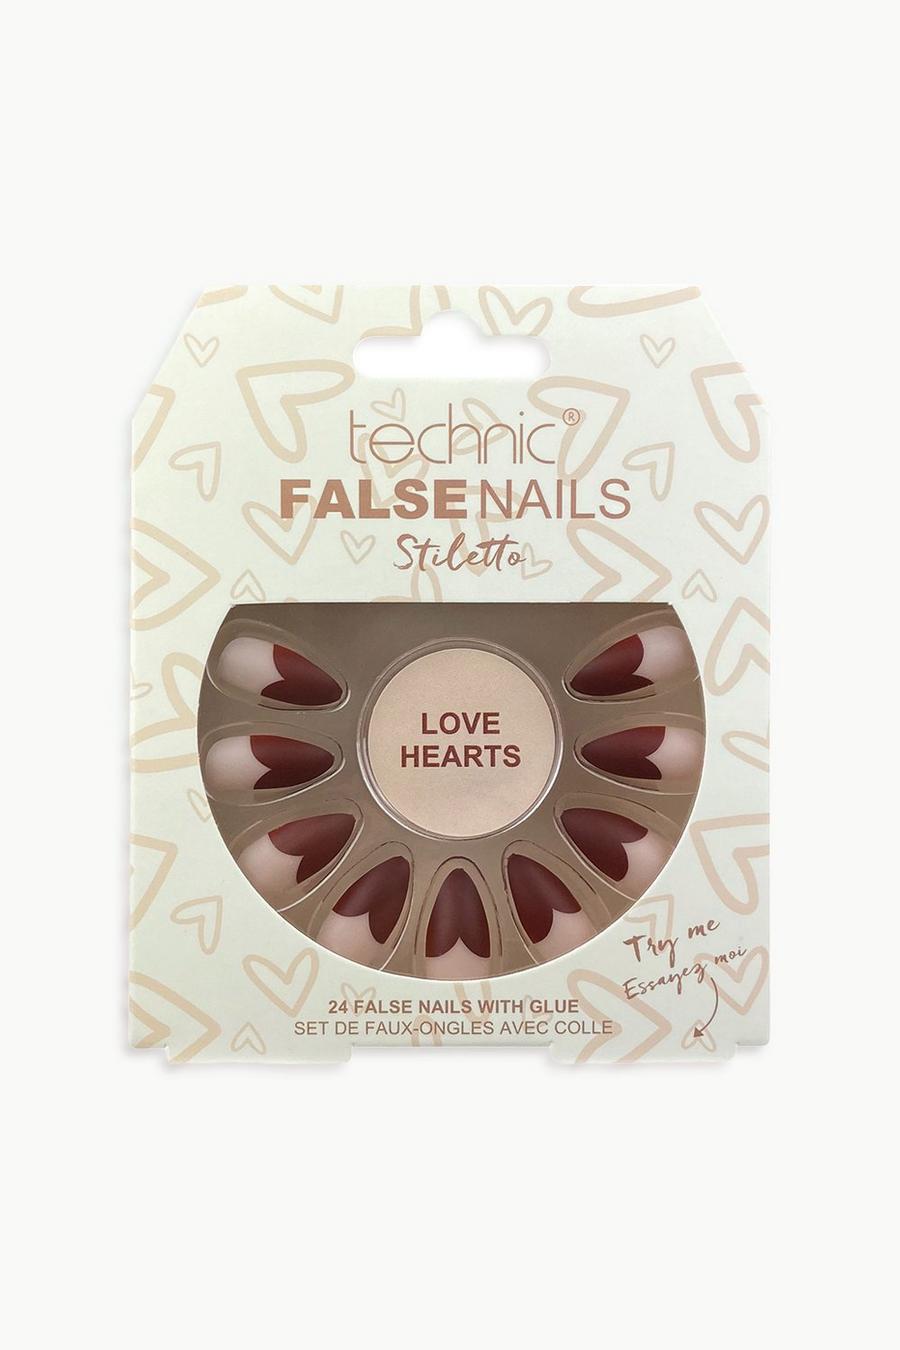 Cream Technic False Nails Stiletto - Love Hearts image number 1